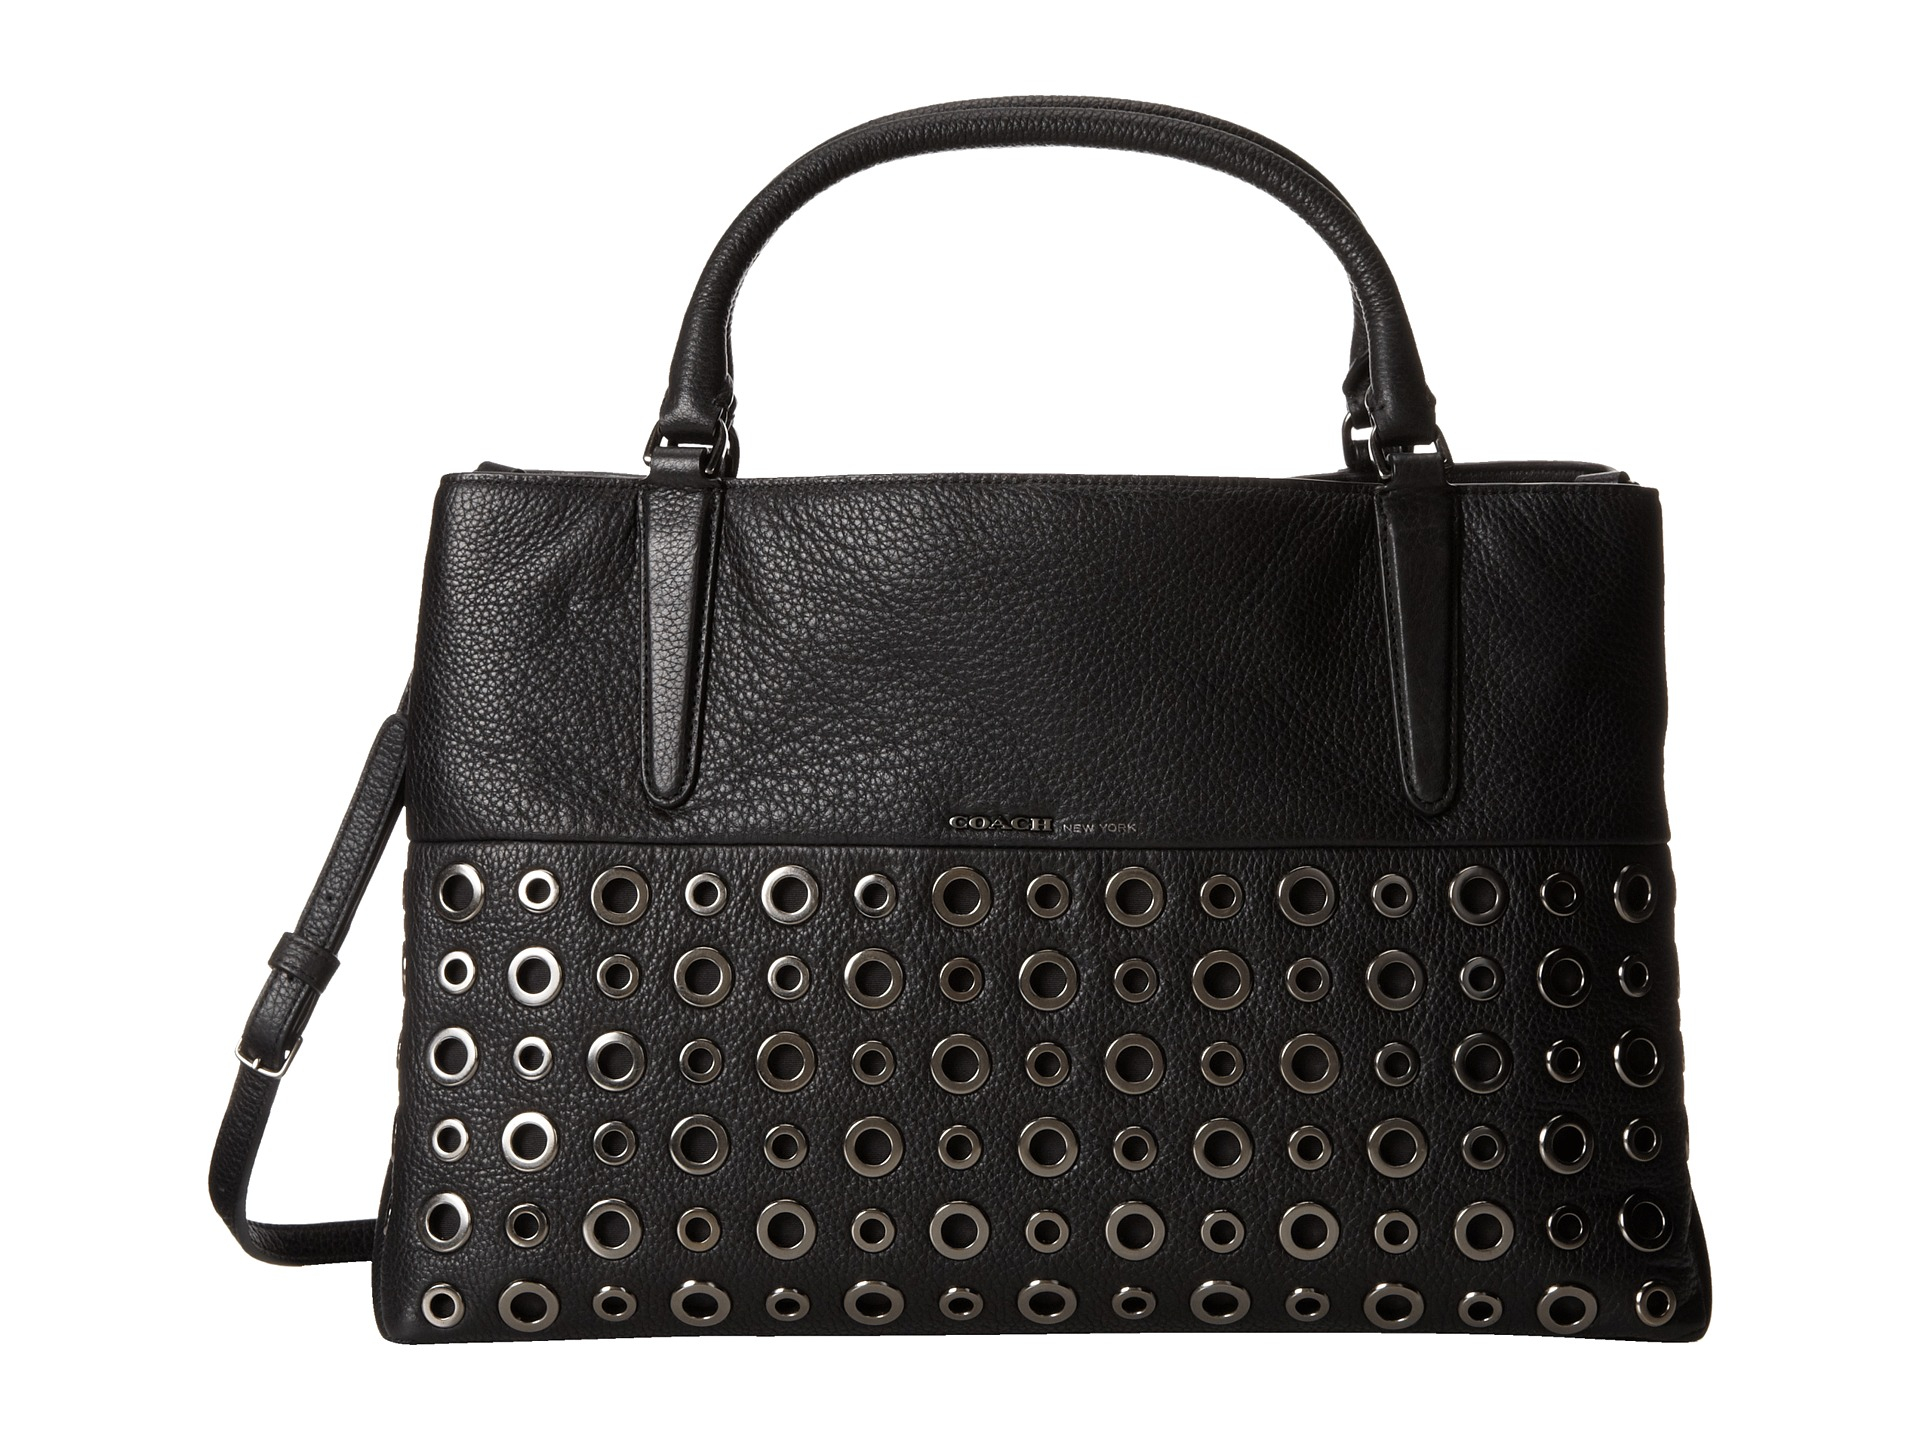 Borough bag leather handbag Coach Black in Leather - 36013707